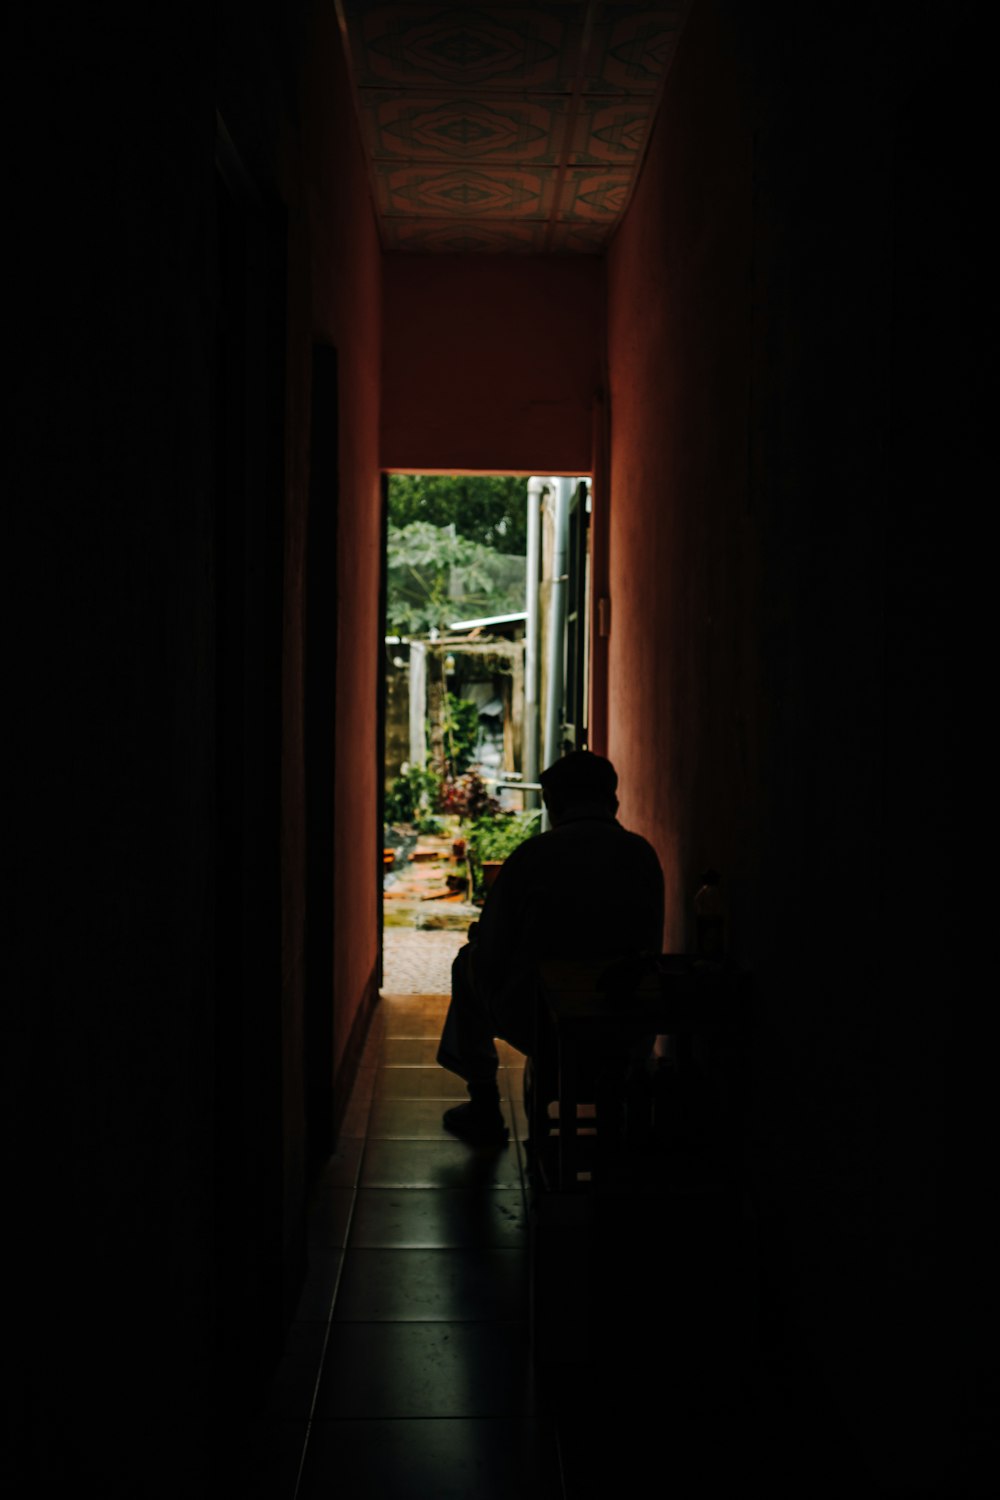 man in black shirt sitting on chair near window during daytime